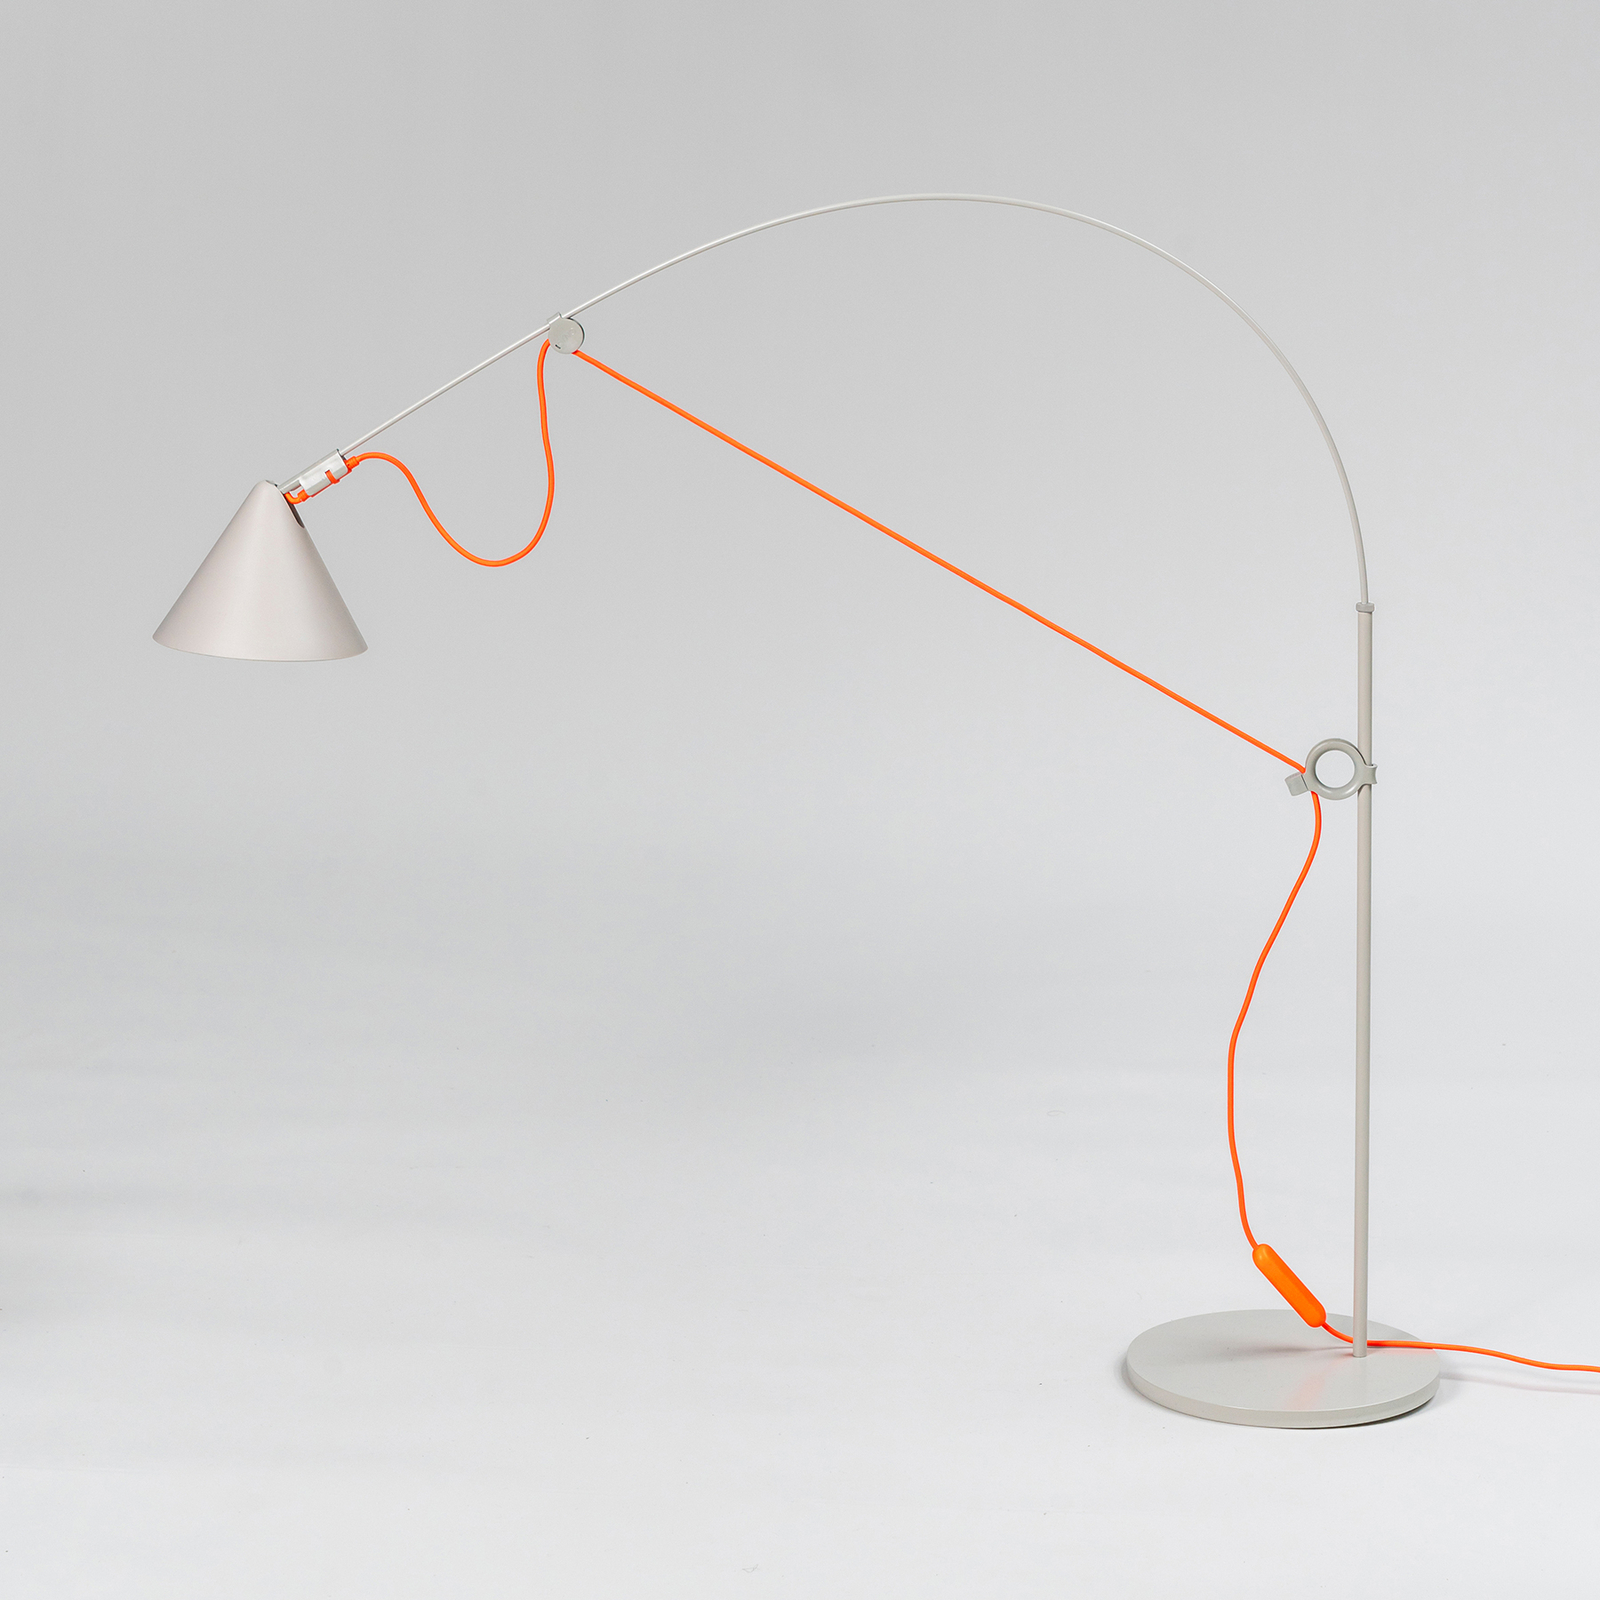 midgard AYNO S lampe de table grise/orange 4 000 K